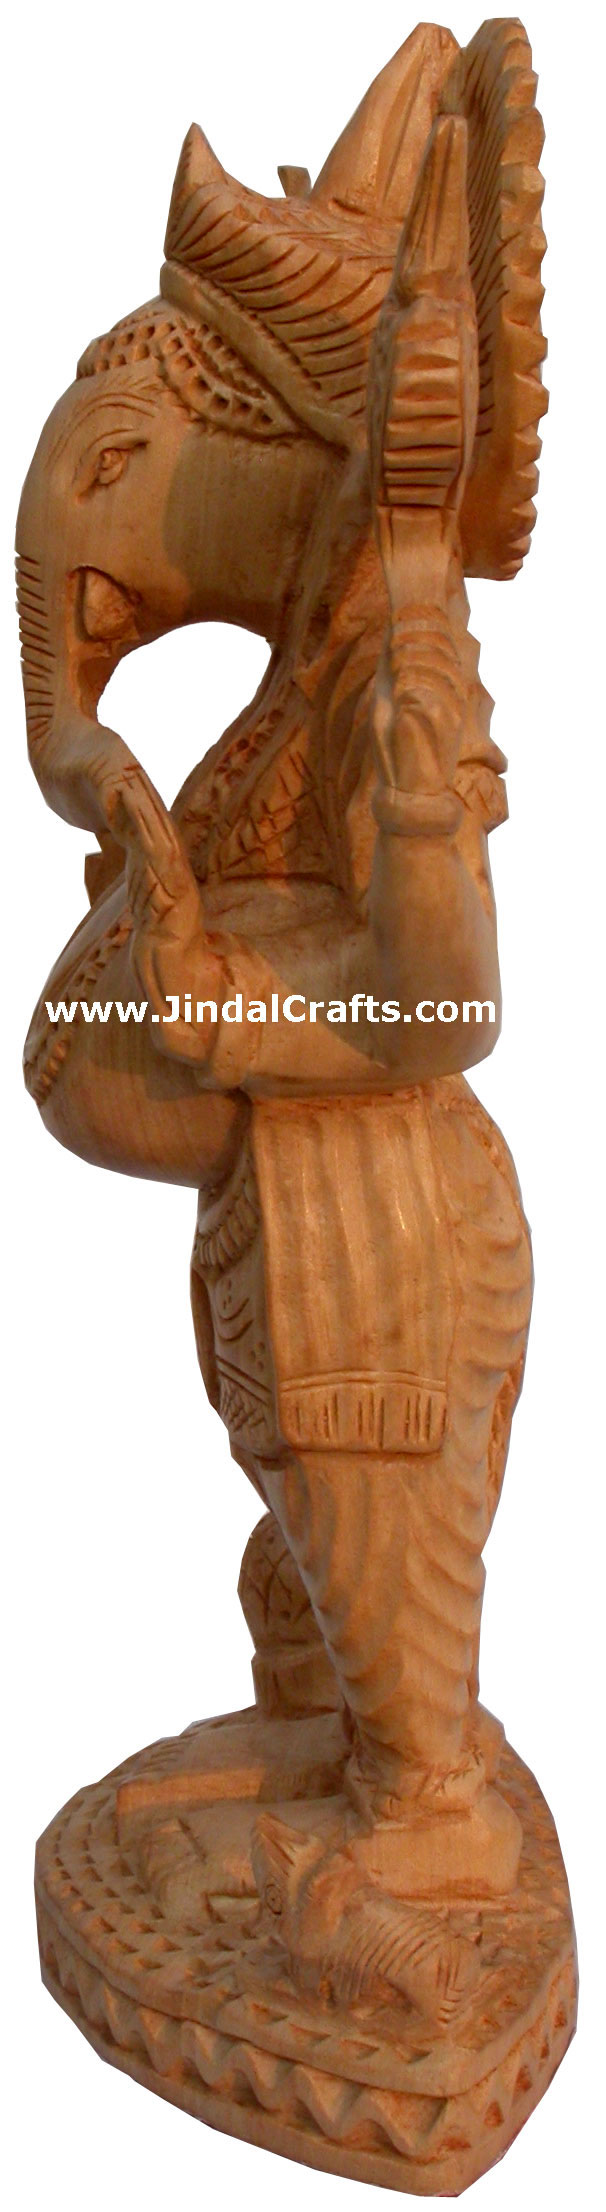 Ganesh Hand Carving India Religious Hindu Sculpture Art